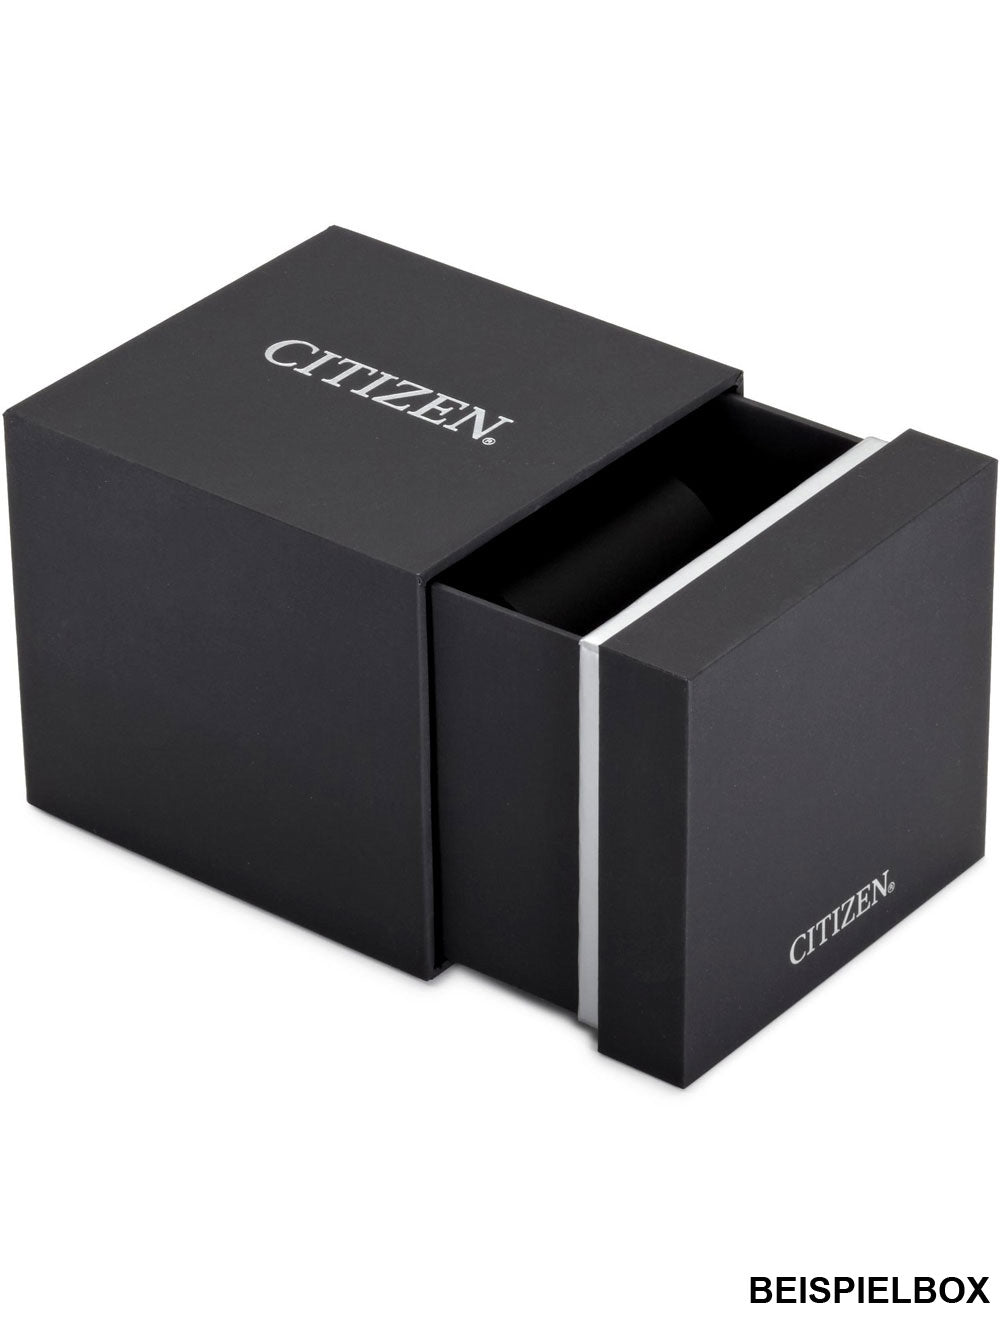 Citizen CA0711-80H Promaster chronograph 44mm 20ATM